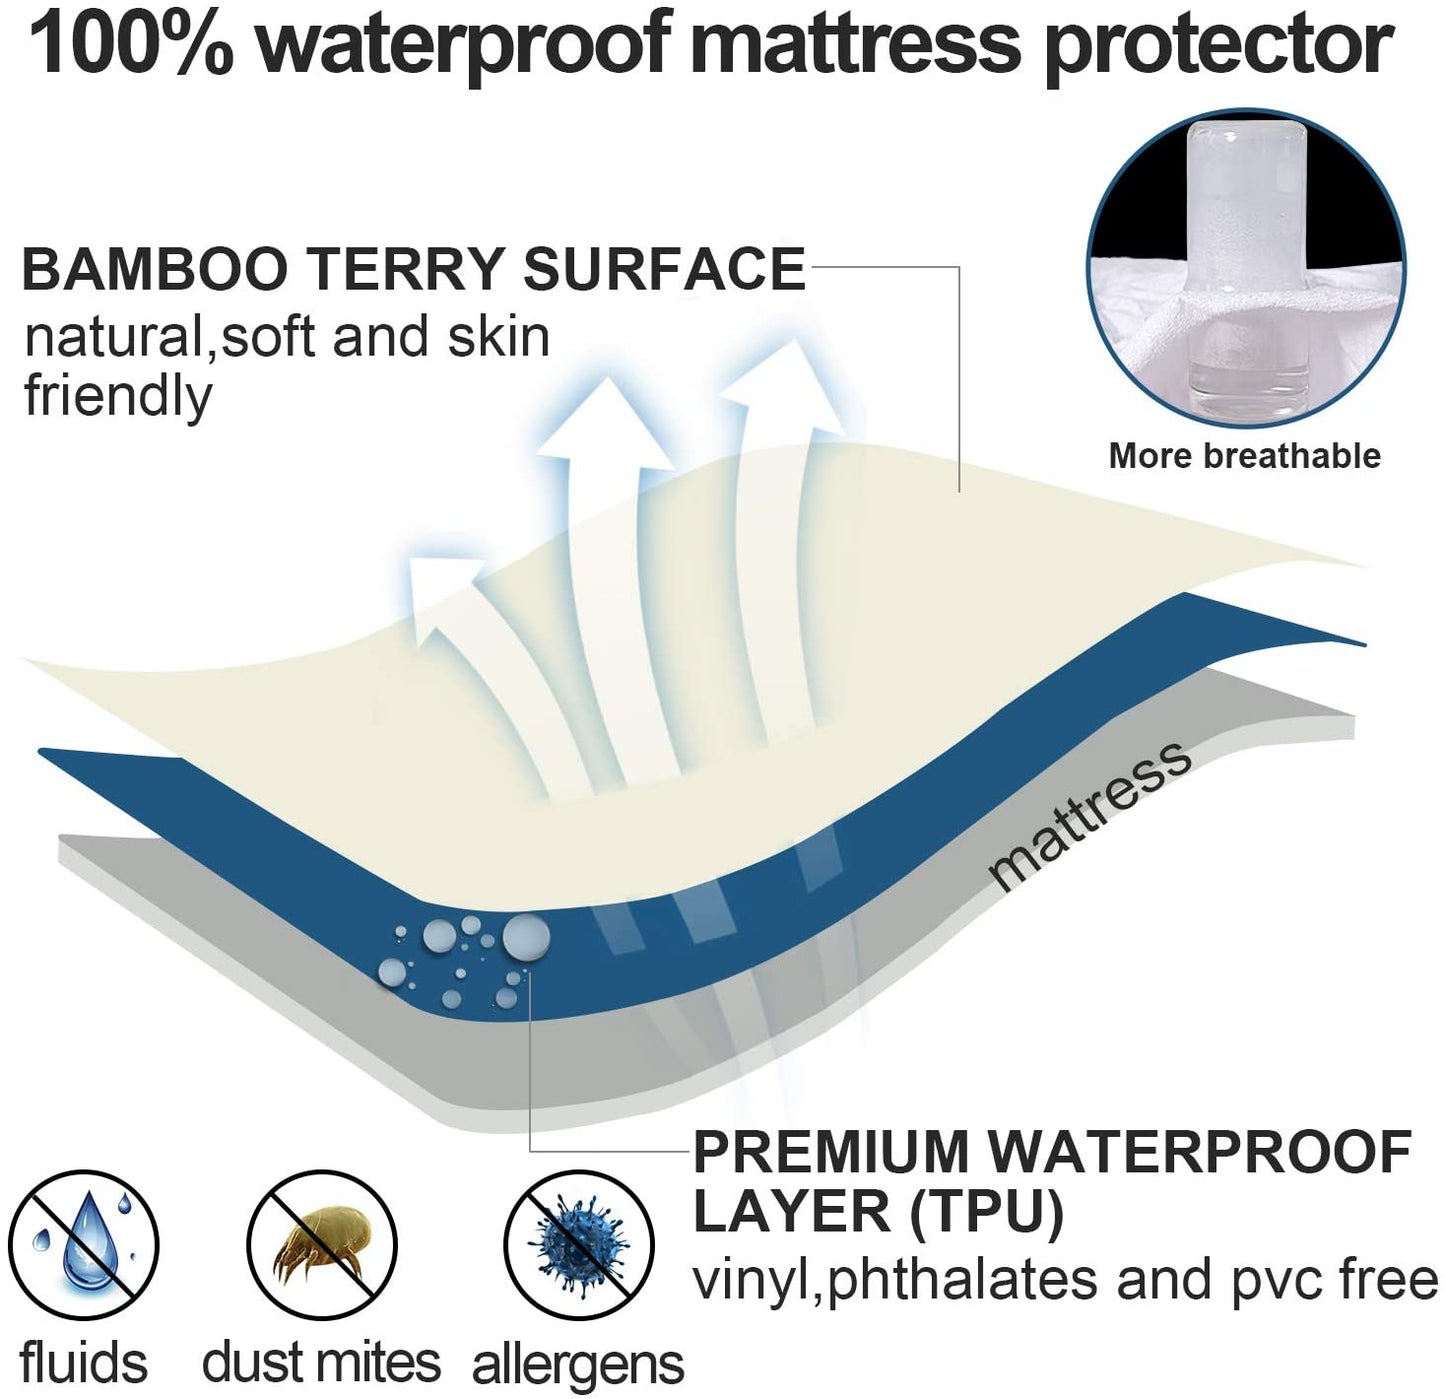 Mattress Cover/Protector- Bamboo, Waterproof,Hypoallergenic, Noiseless